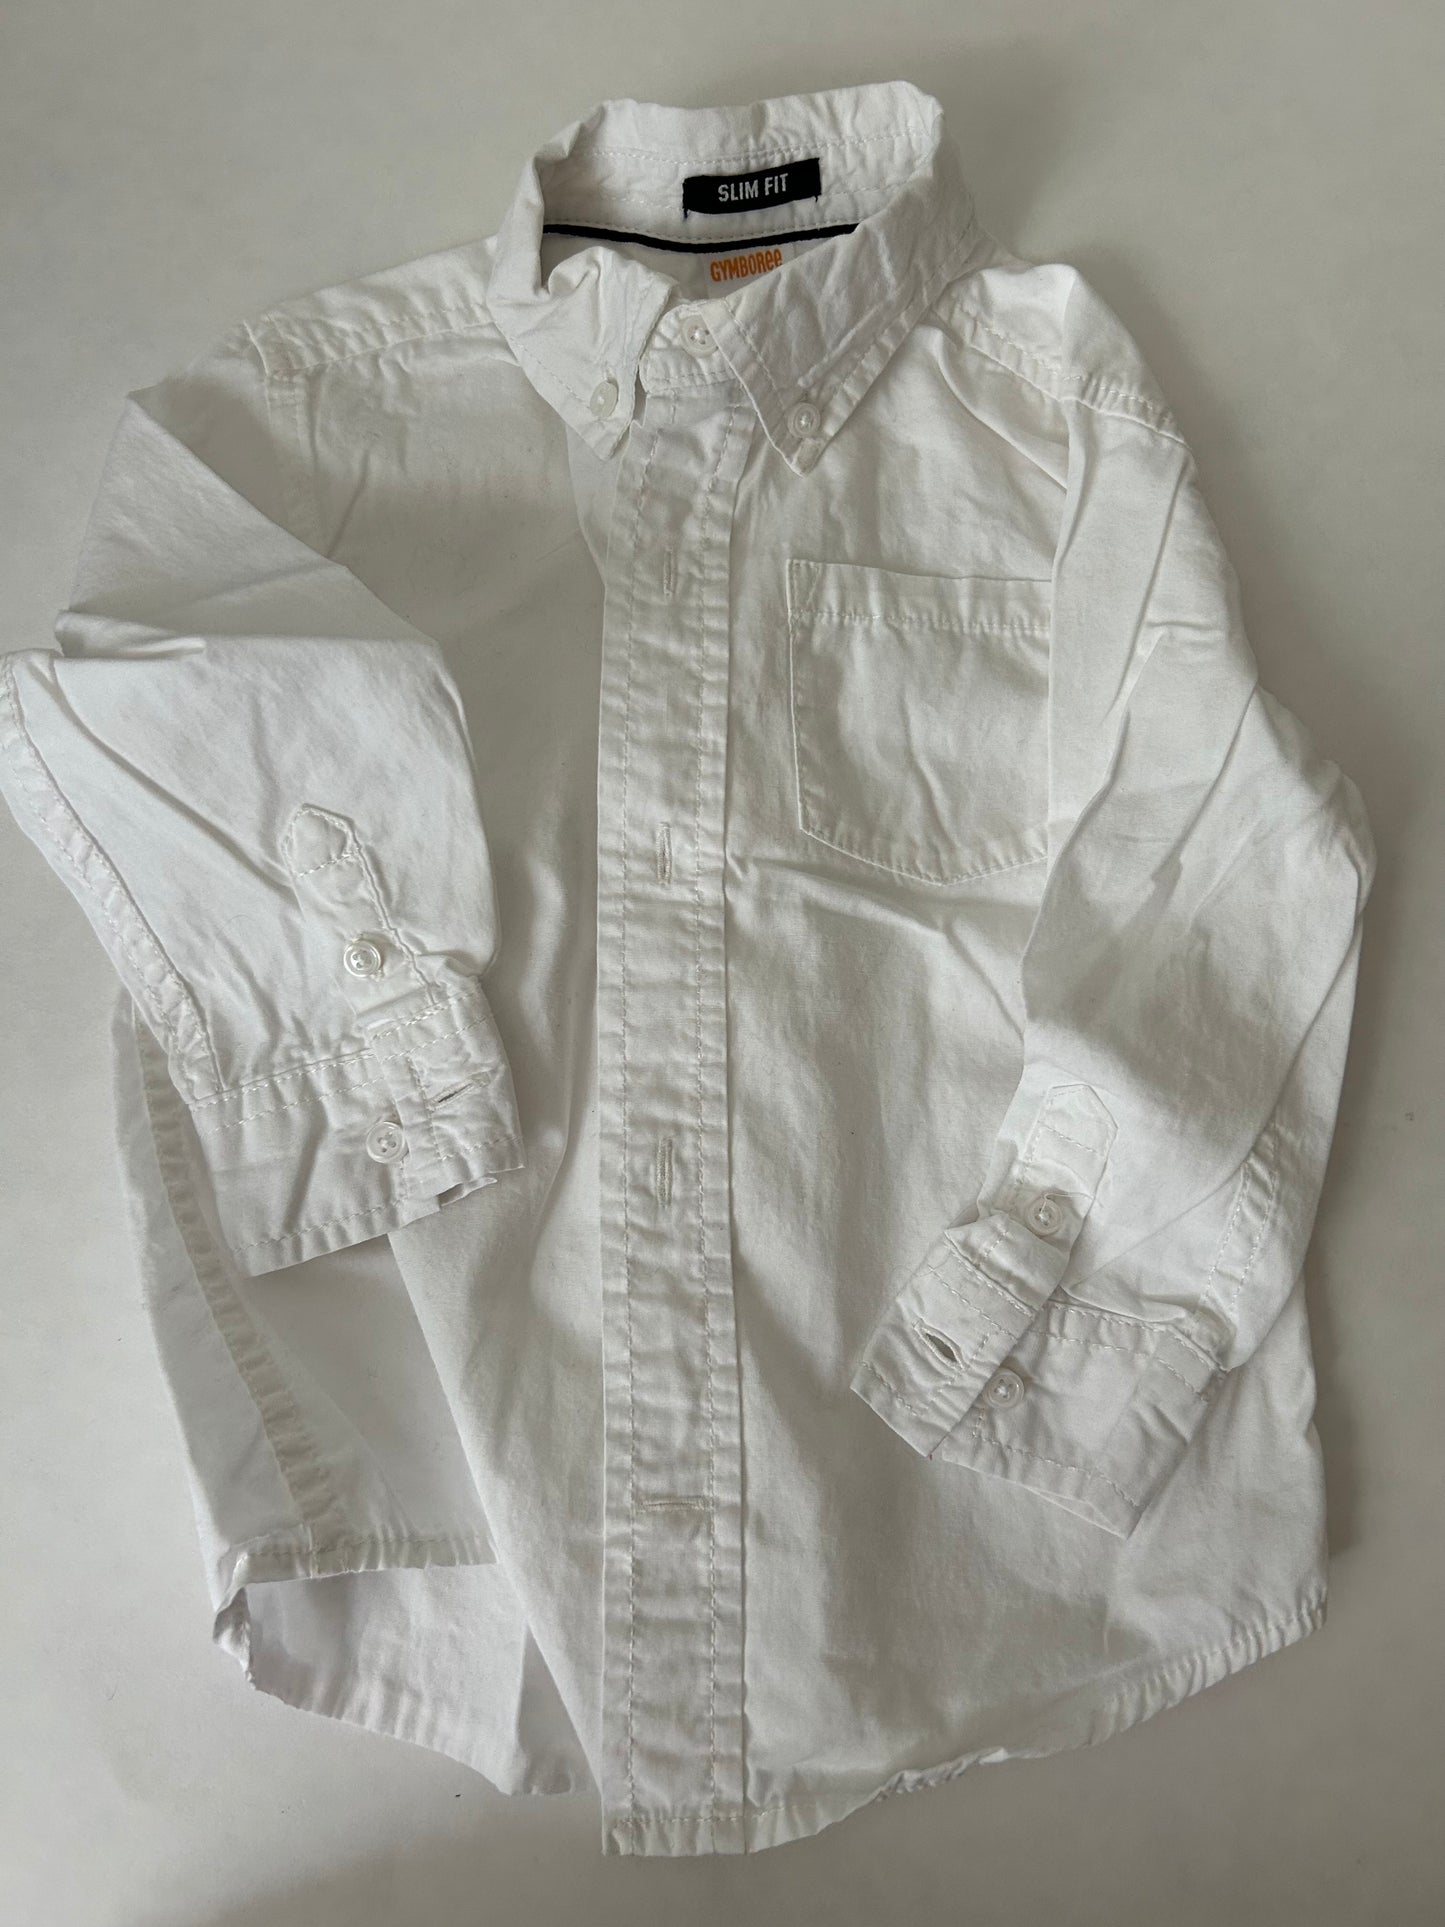 Boys 2T Gymboree white collared dress shirt